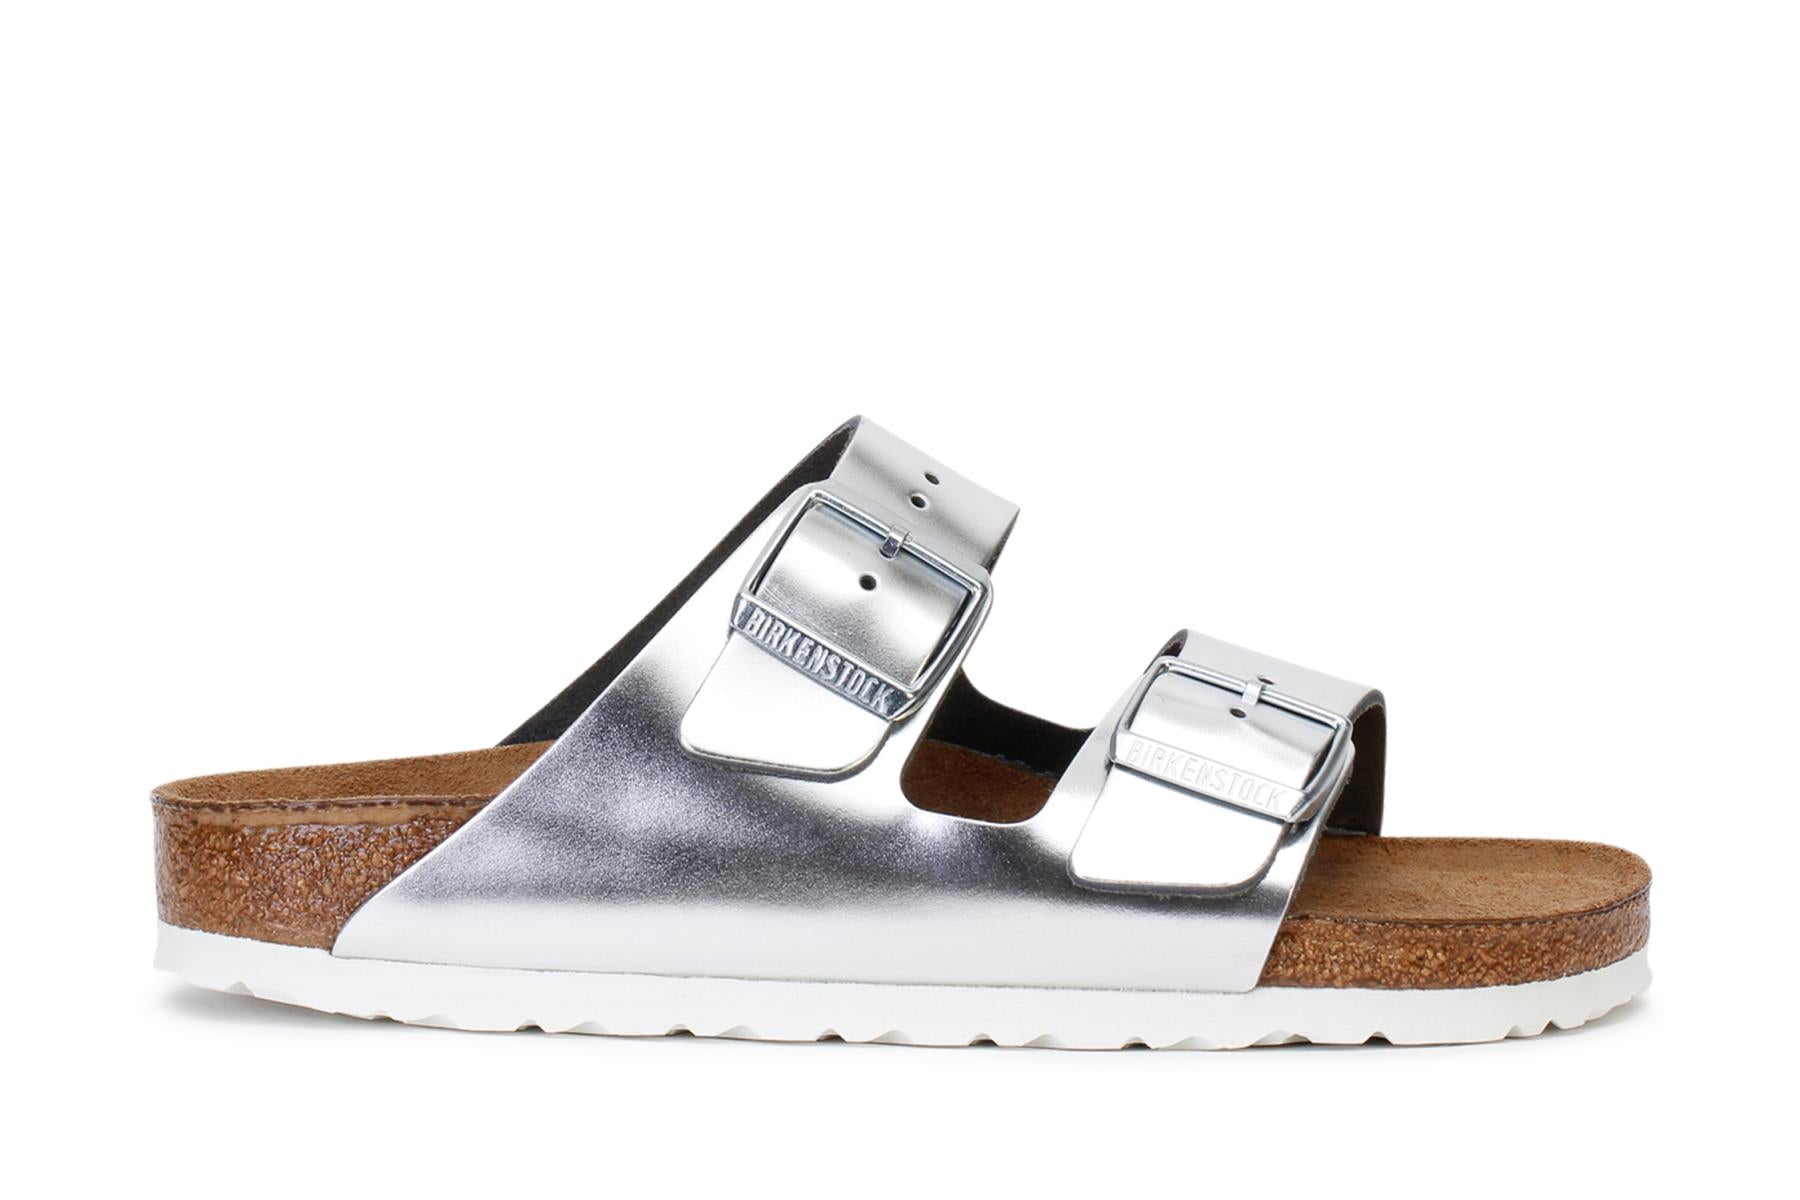 birkenstock-womens-slide-sandals-arizona-bs-silver-1005961-narrow-fit-main